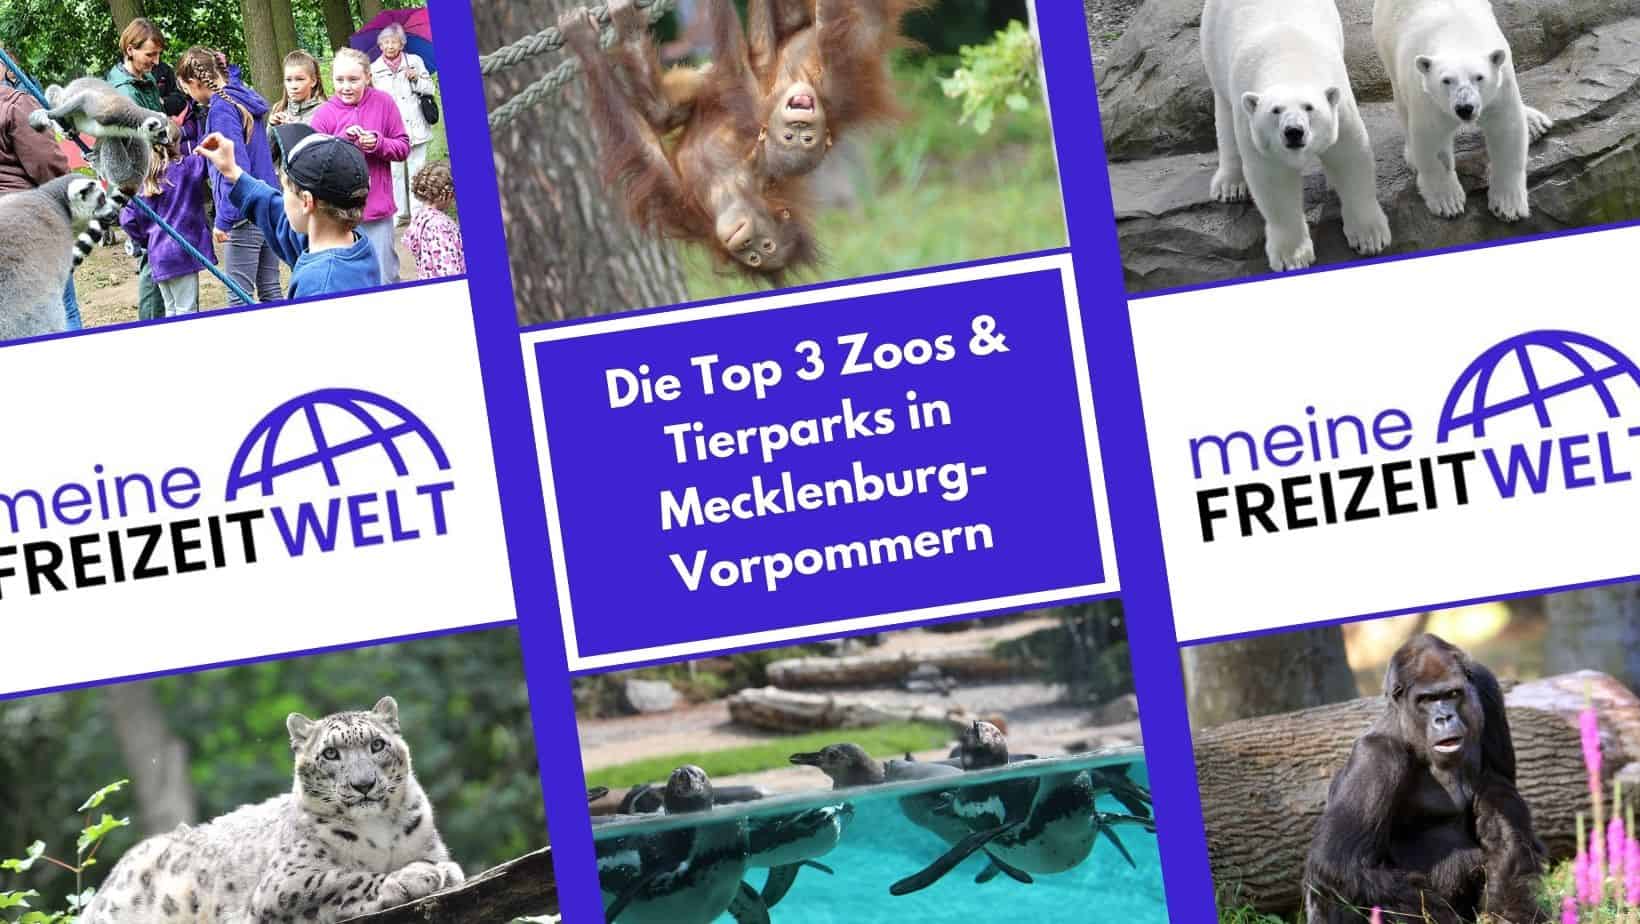 Die Top 3 Zoos & Tierparks in Mecklenburg-Vorpommern